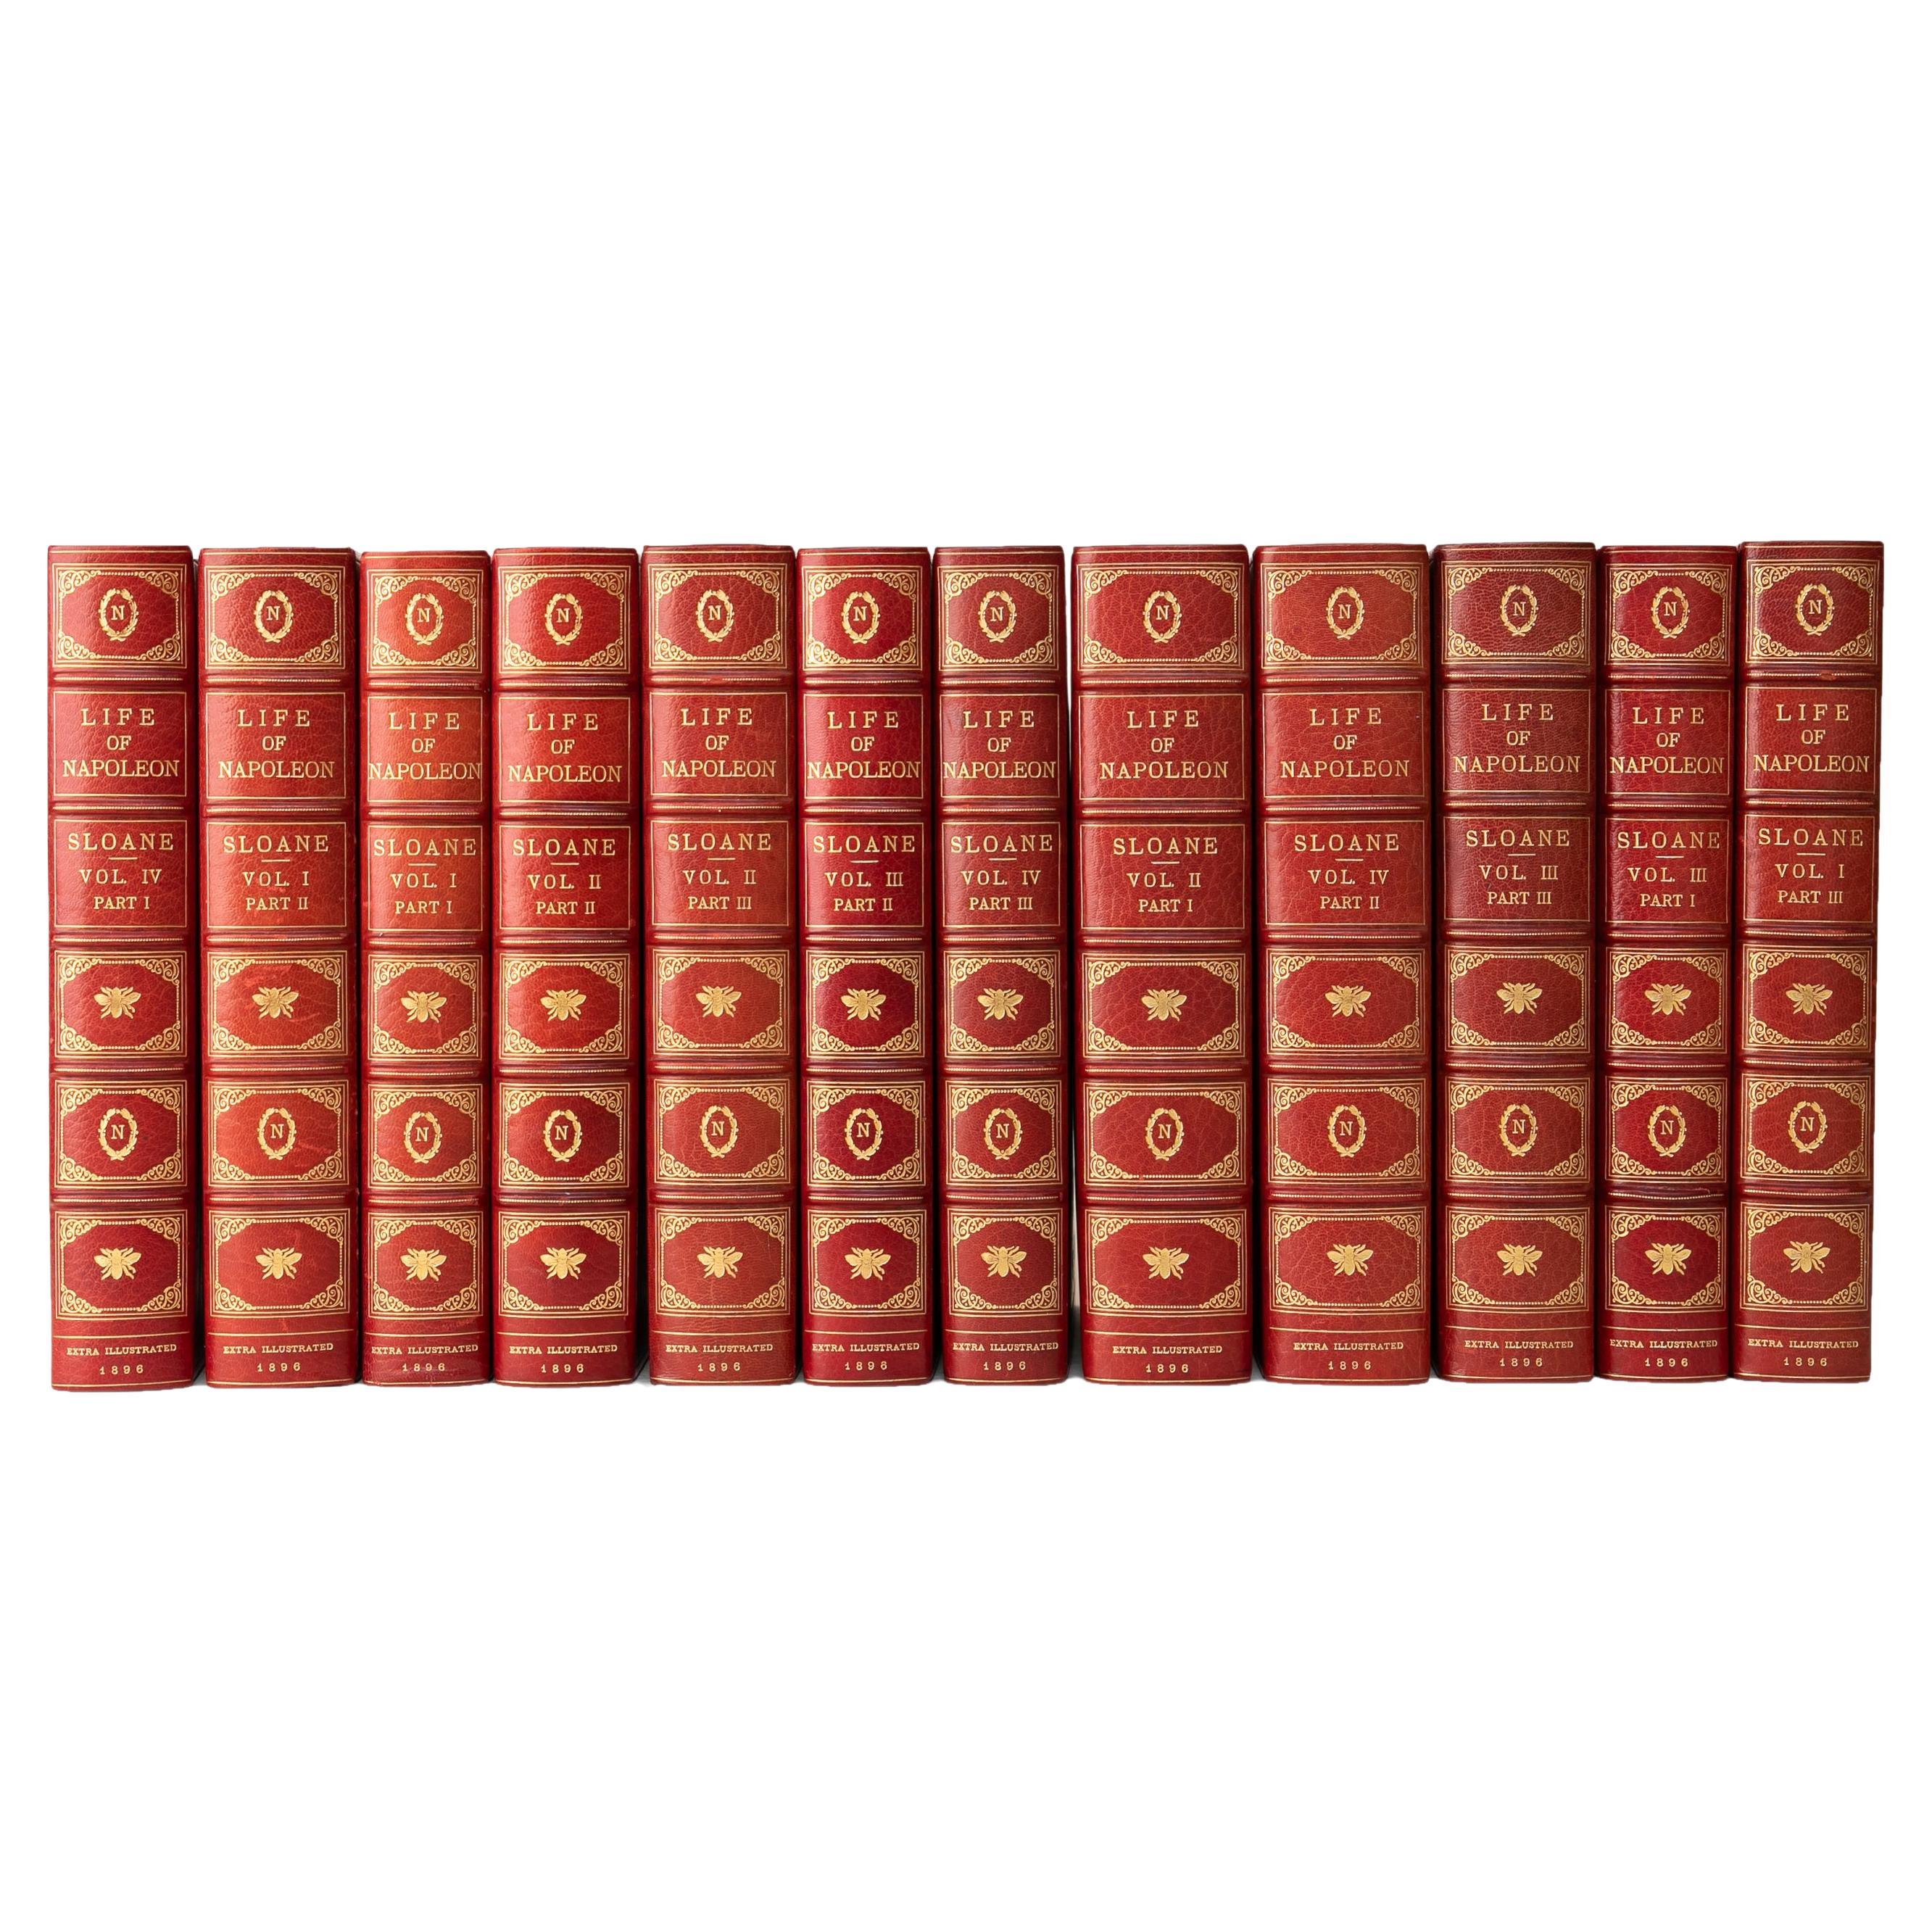 12 Volumes. William M. Sloane. Life of Napoleon. For Sale